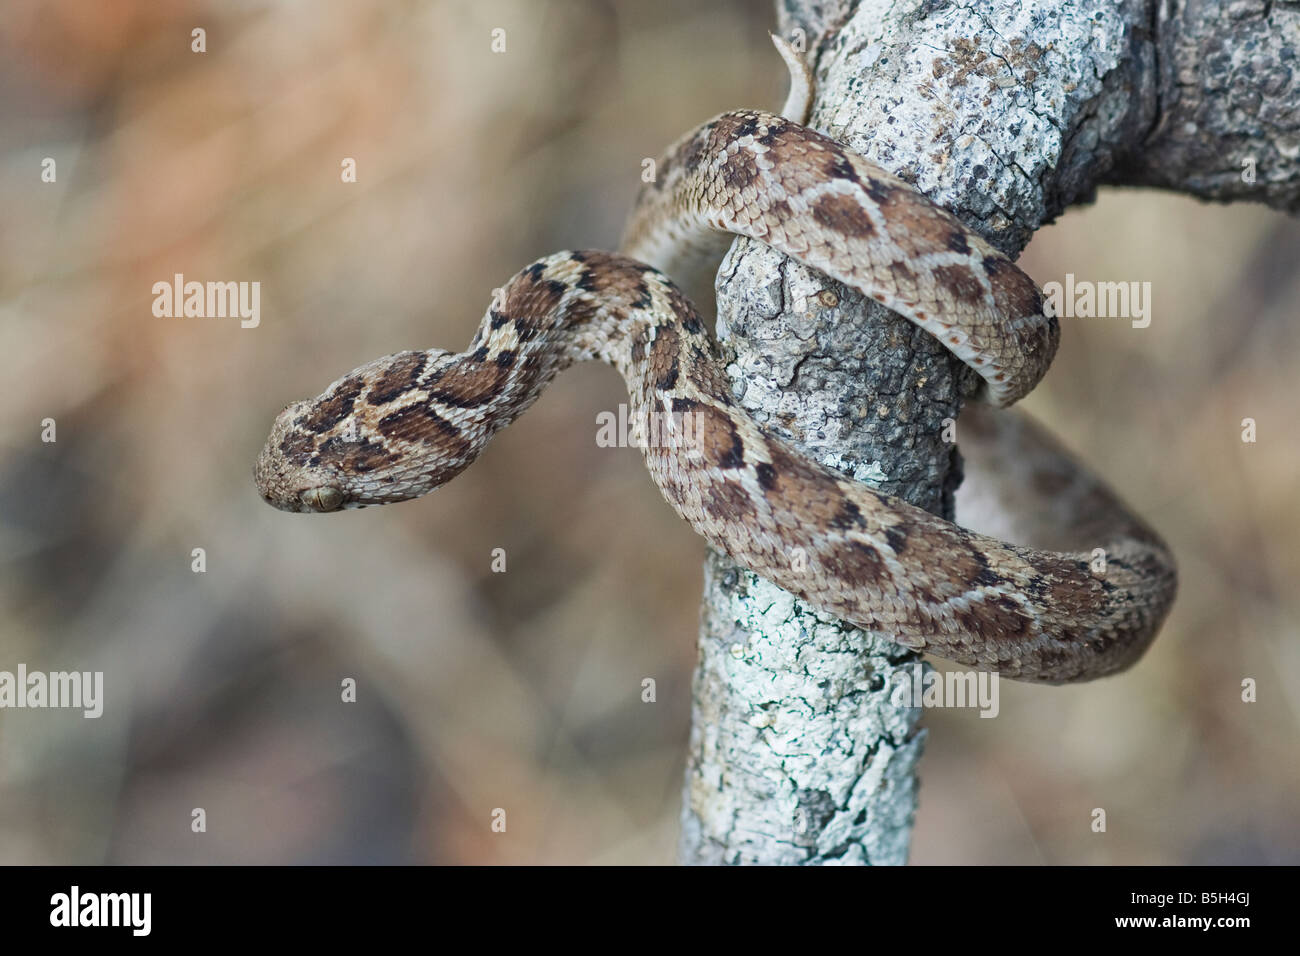 Saw scaled viper in habitat Stock Photo